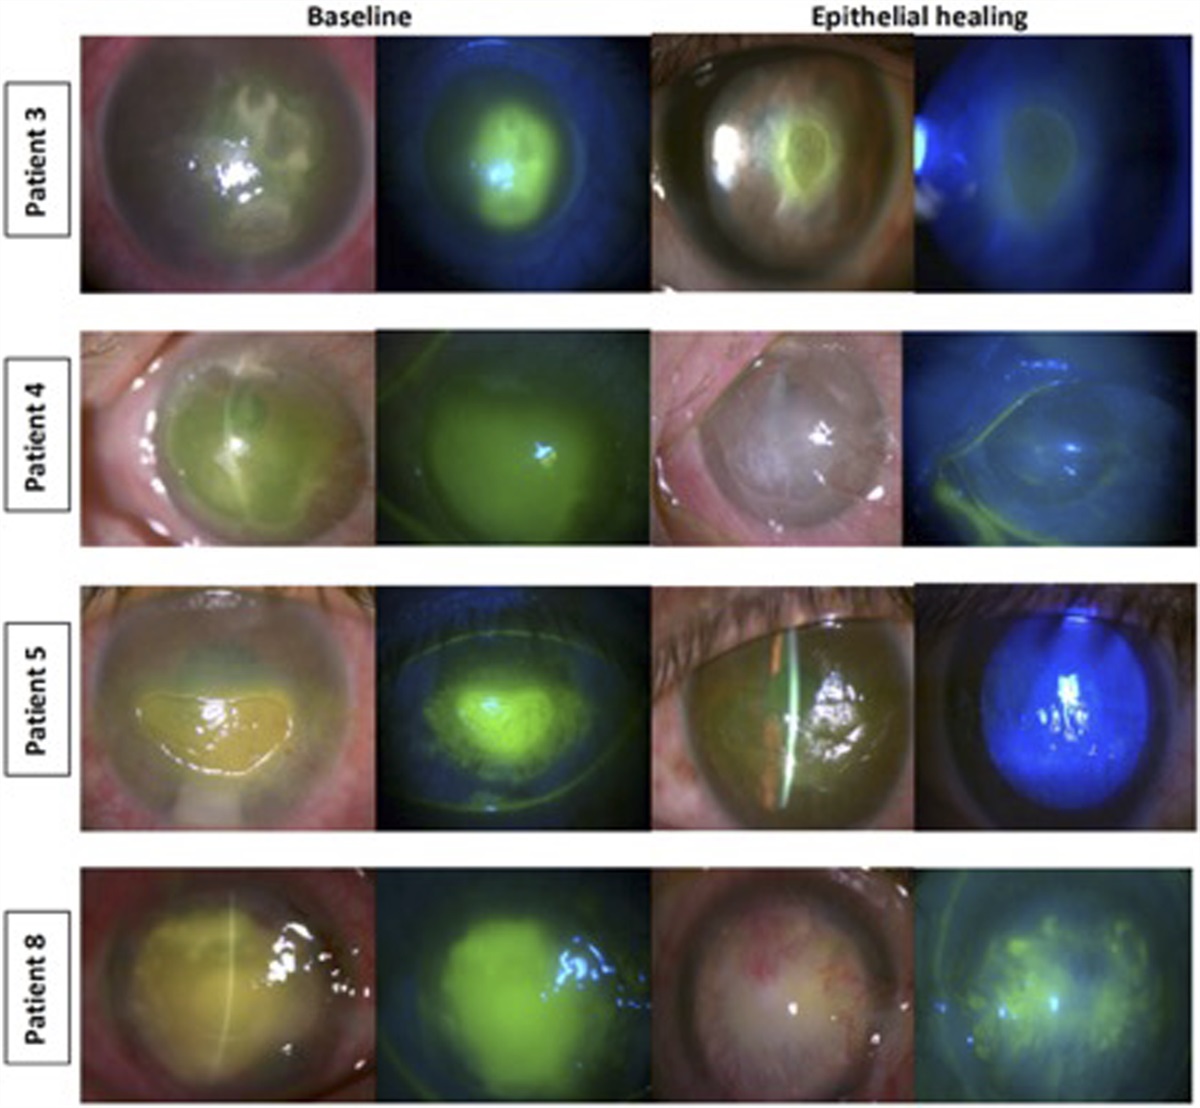 Concomitant Bandage Contact Lens, Oral Nicergoline, and Topical Autologous Serum for Severe Neurotrophic Keratitis